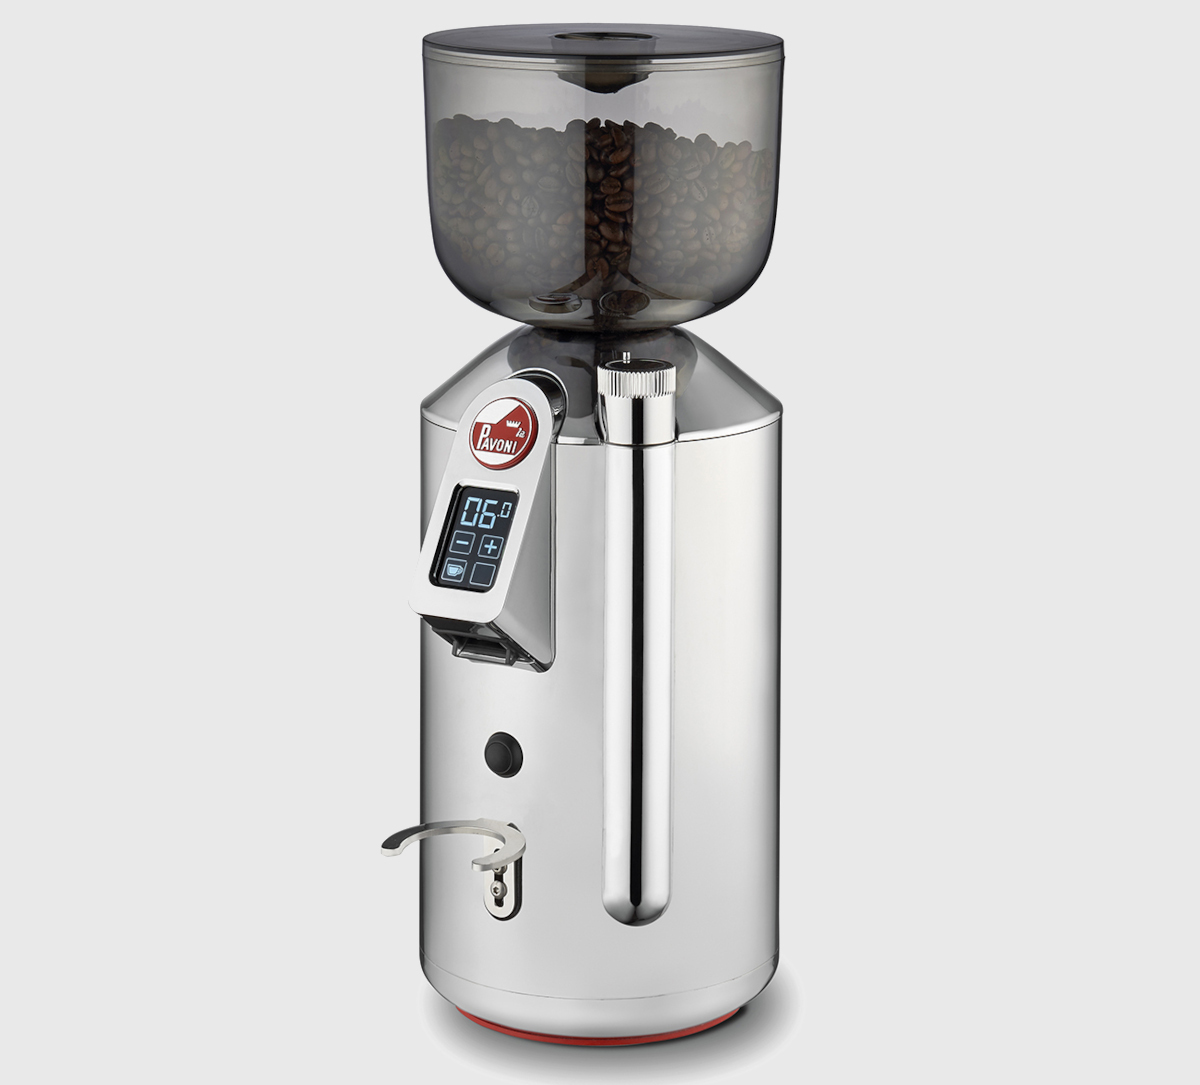 La Pavoni Cilindro coffee grinder